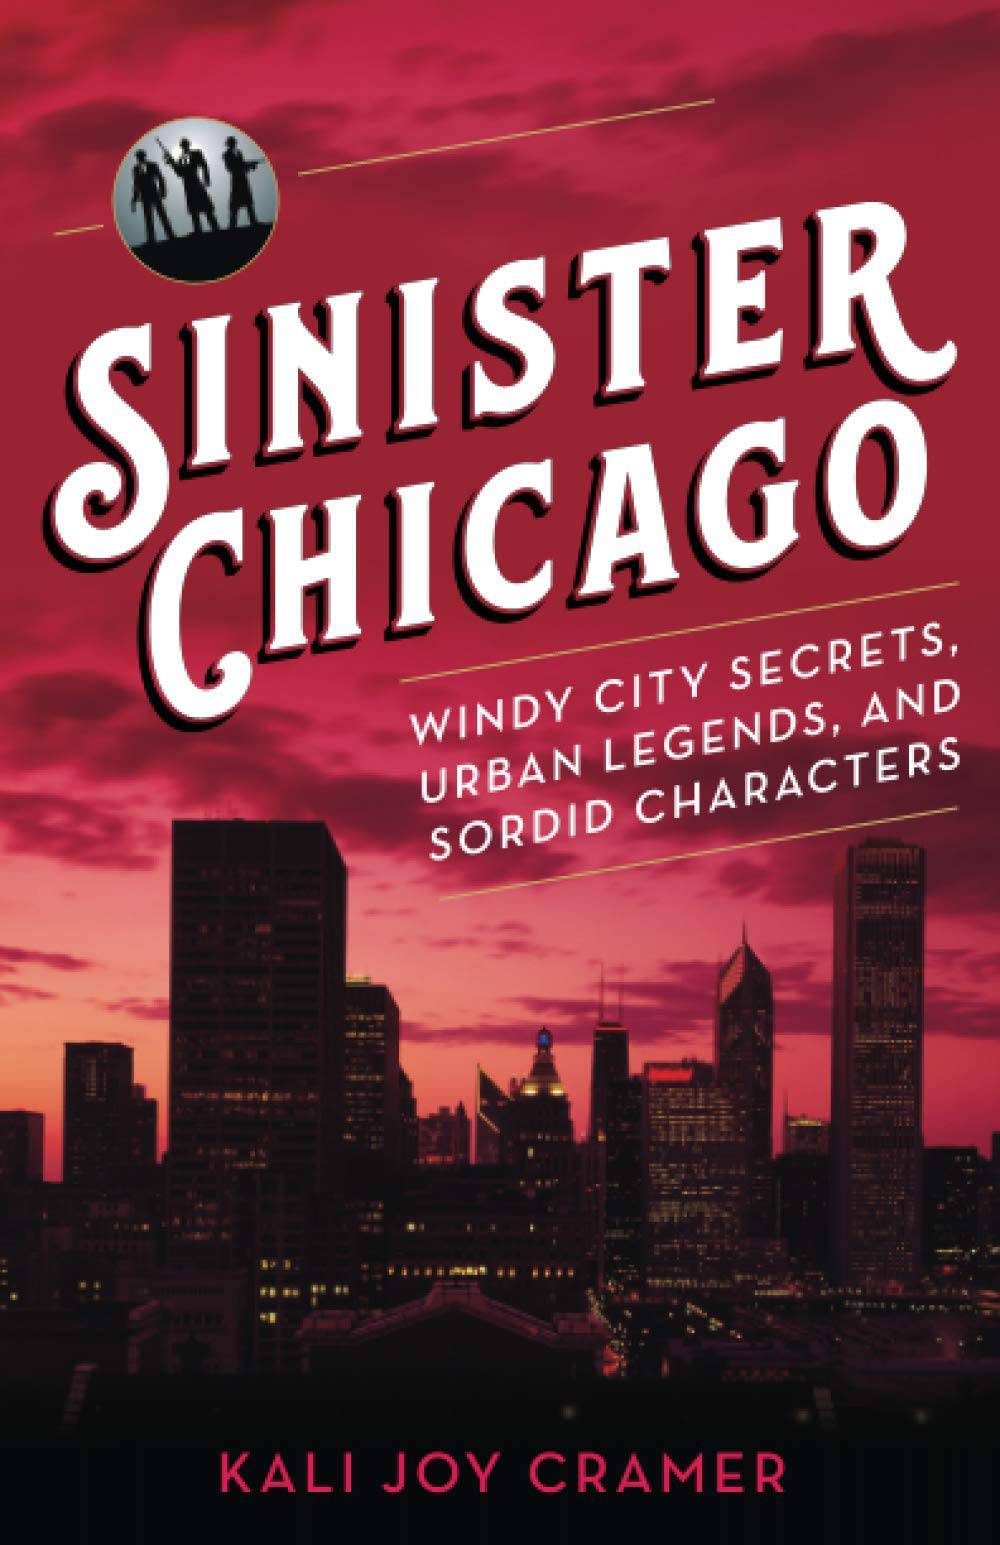 Sinister Chicago - SureShot Books Publishing LLC